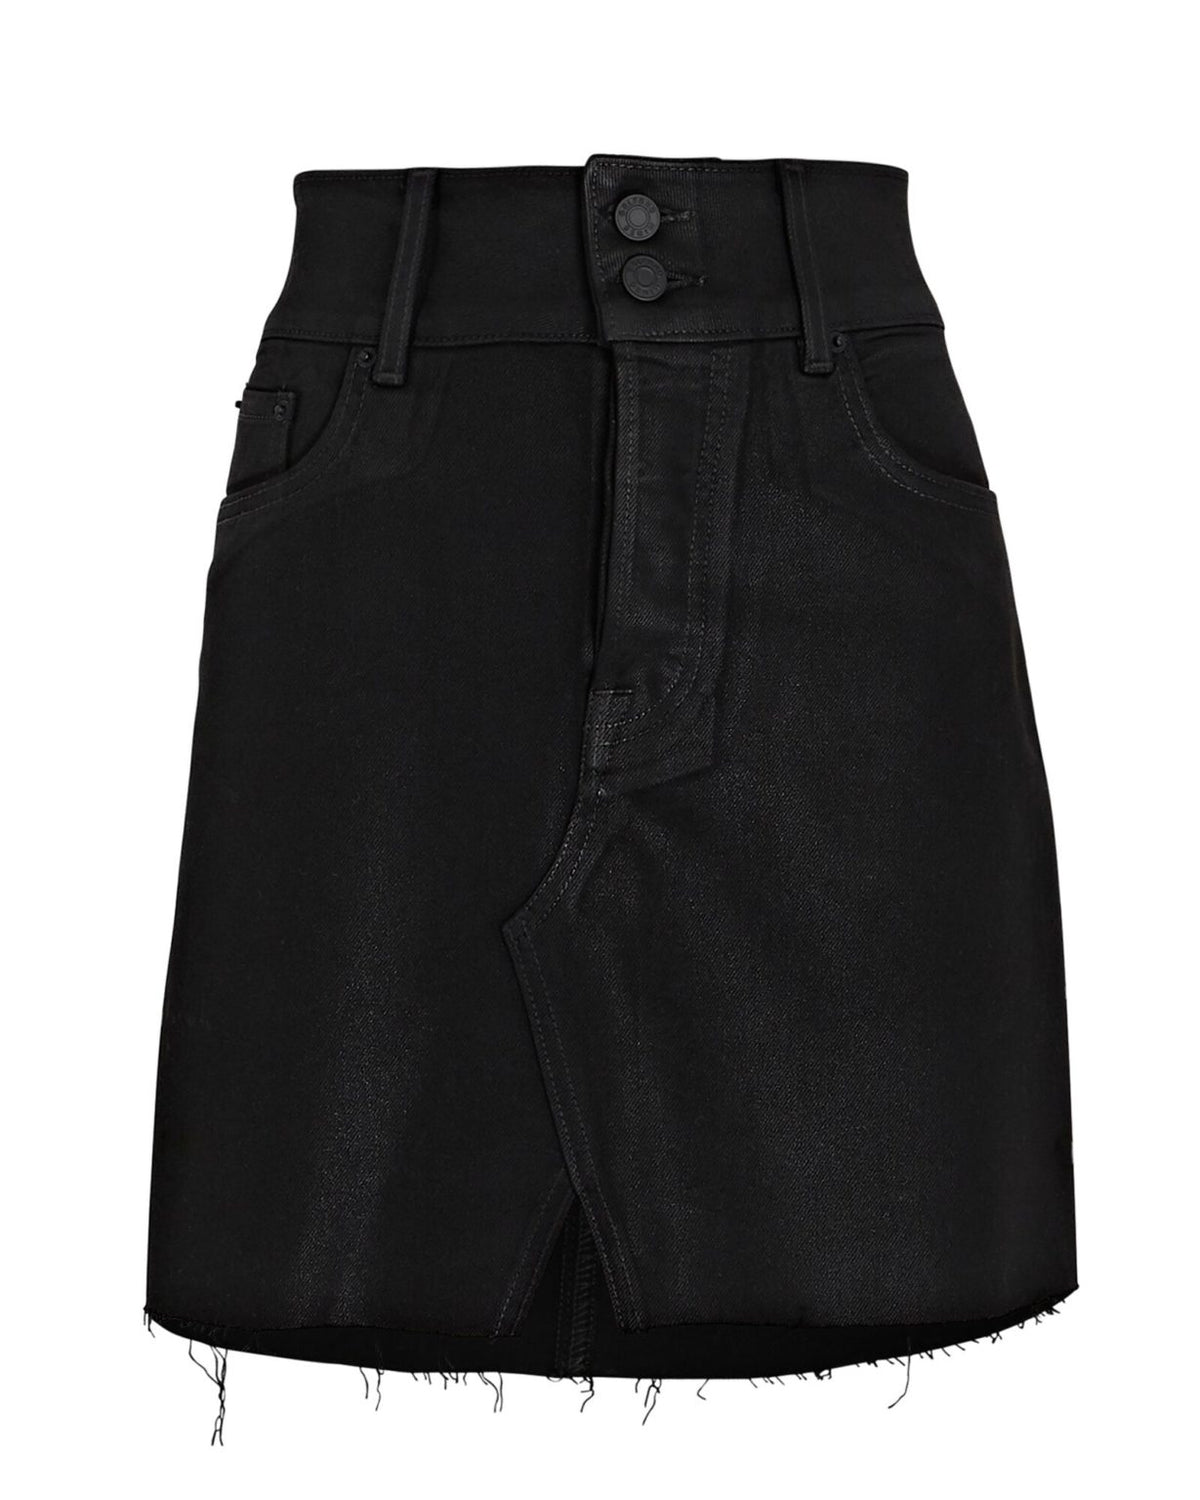 Evie Denim Mini Skirt - AshleyCole Boutique